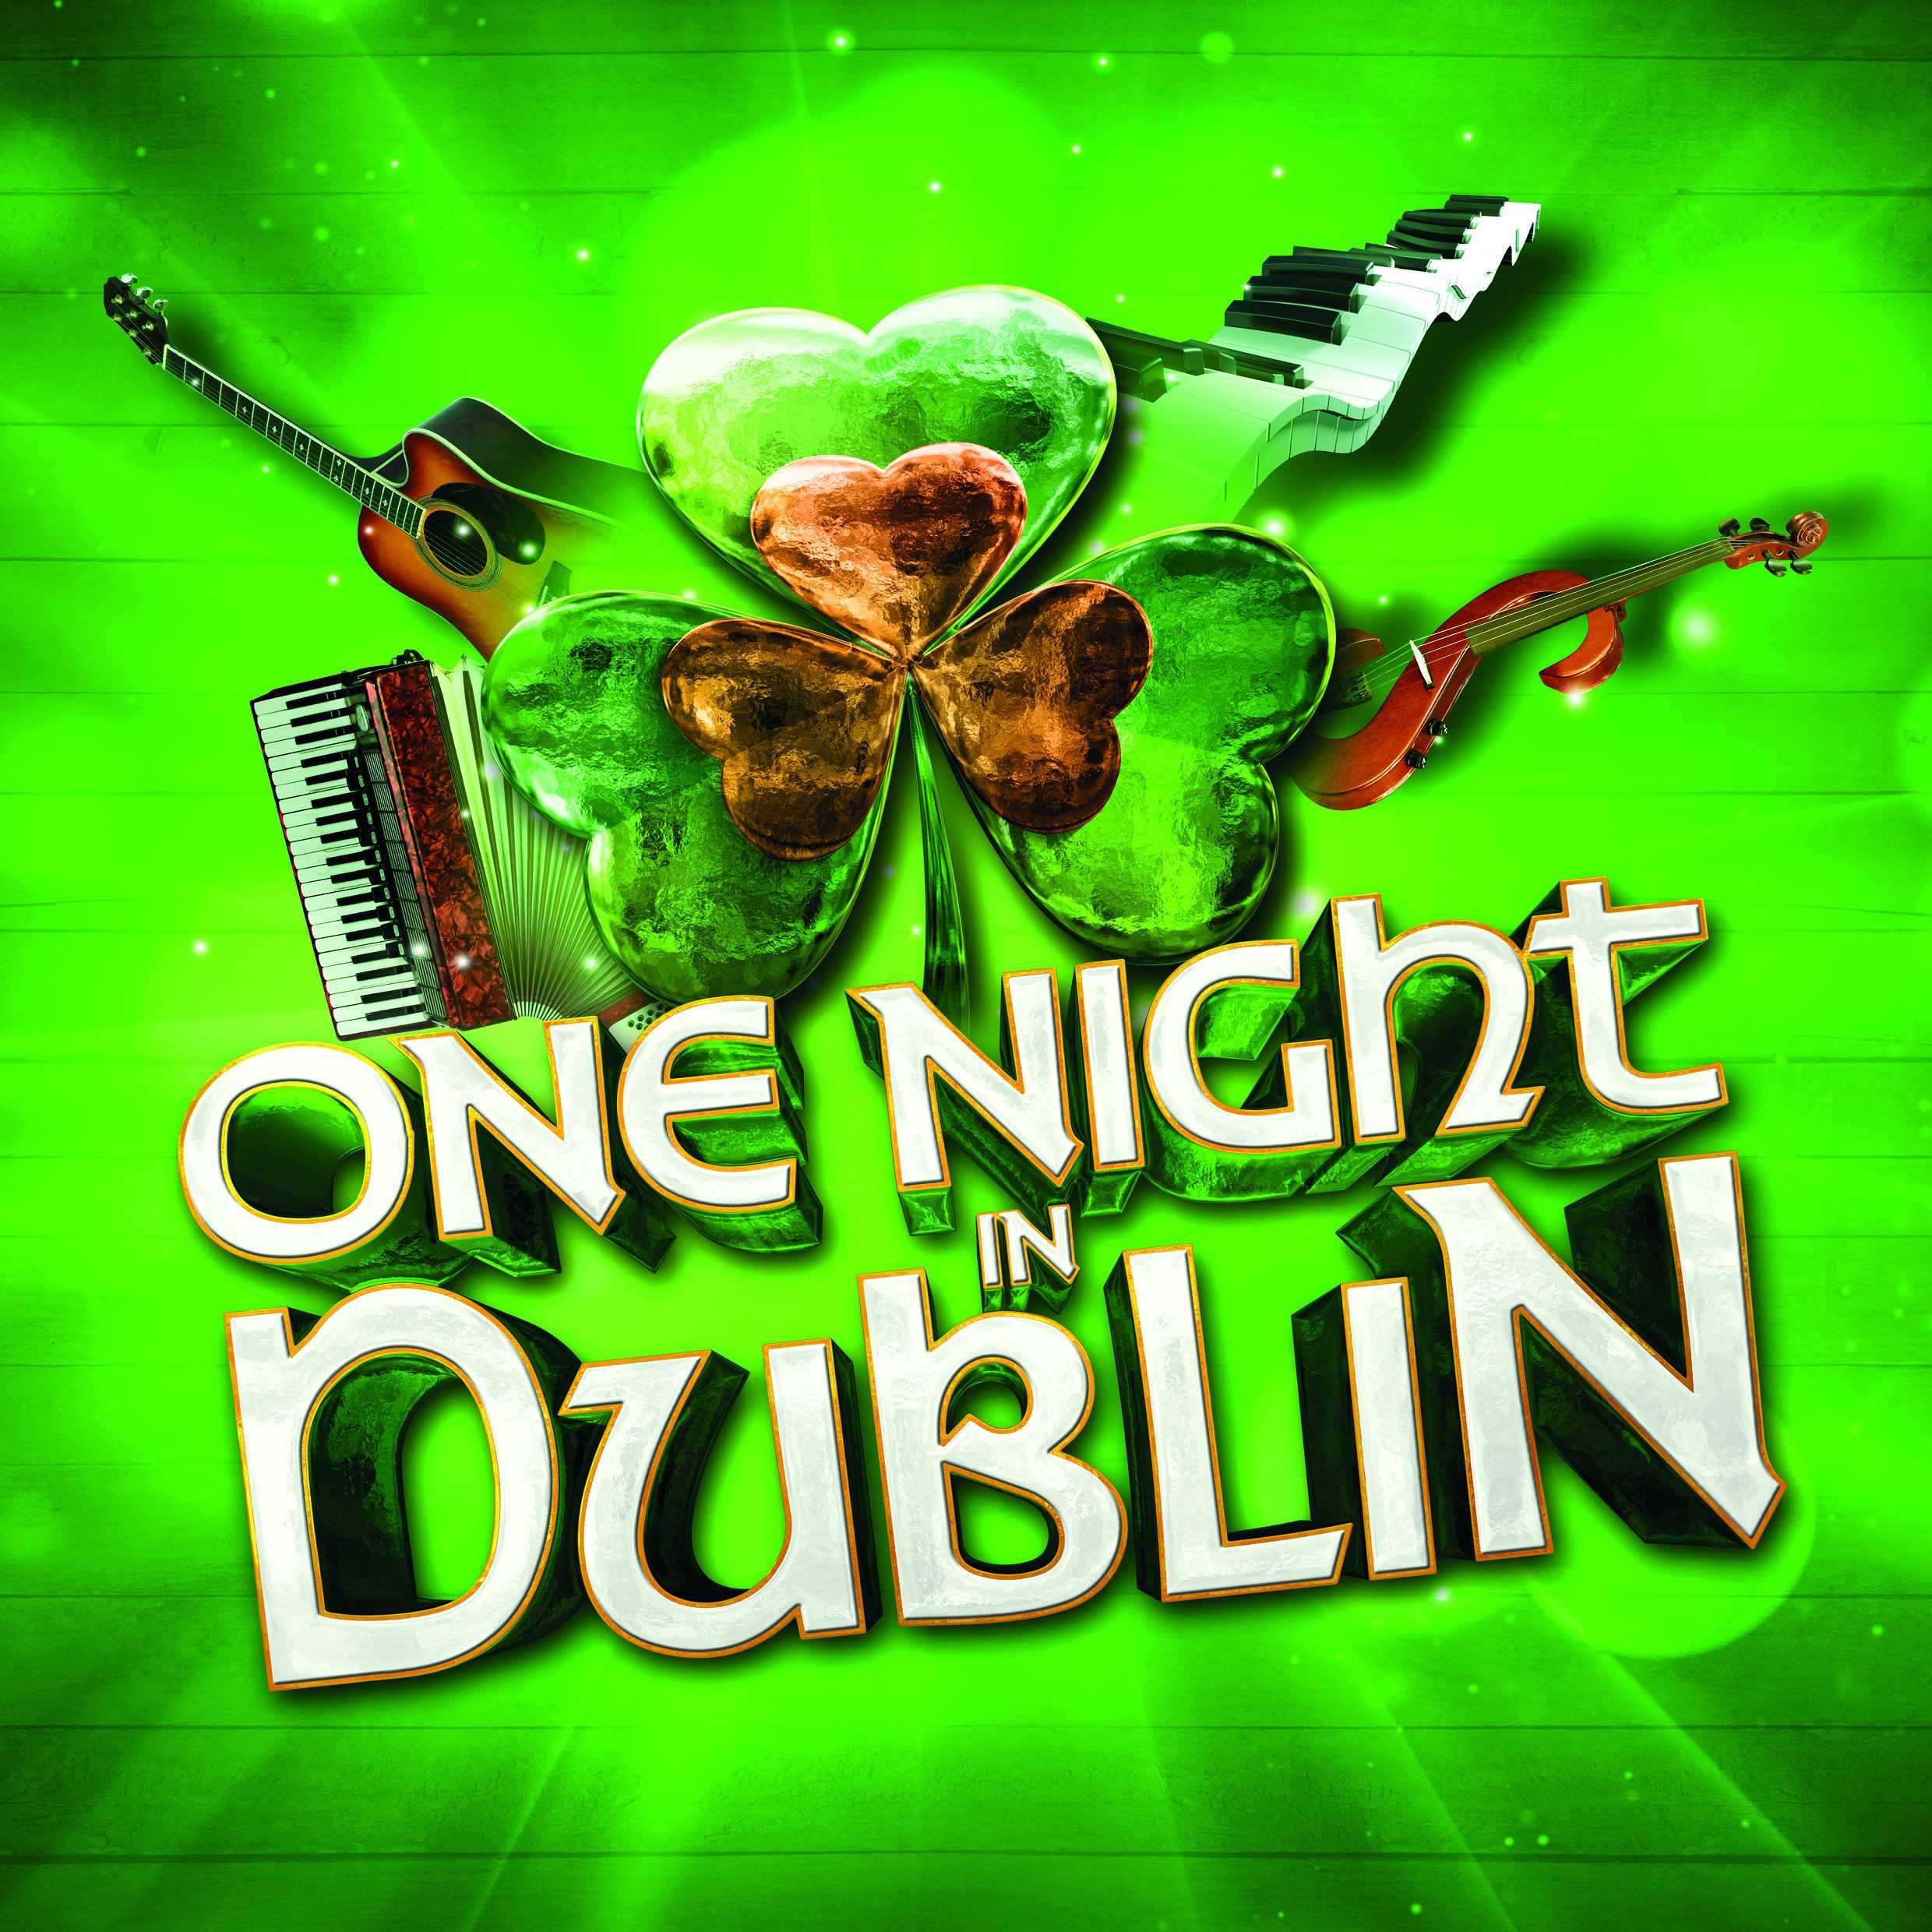 One Night in Dublin Image